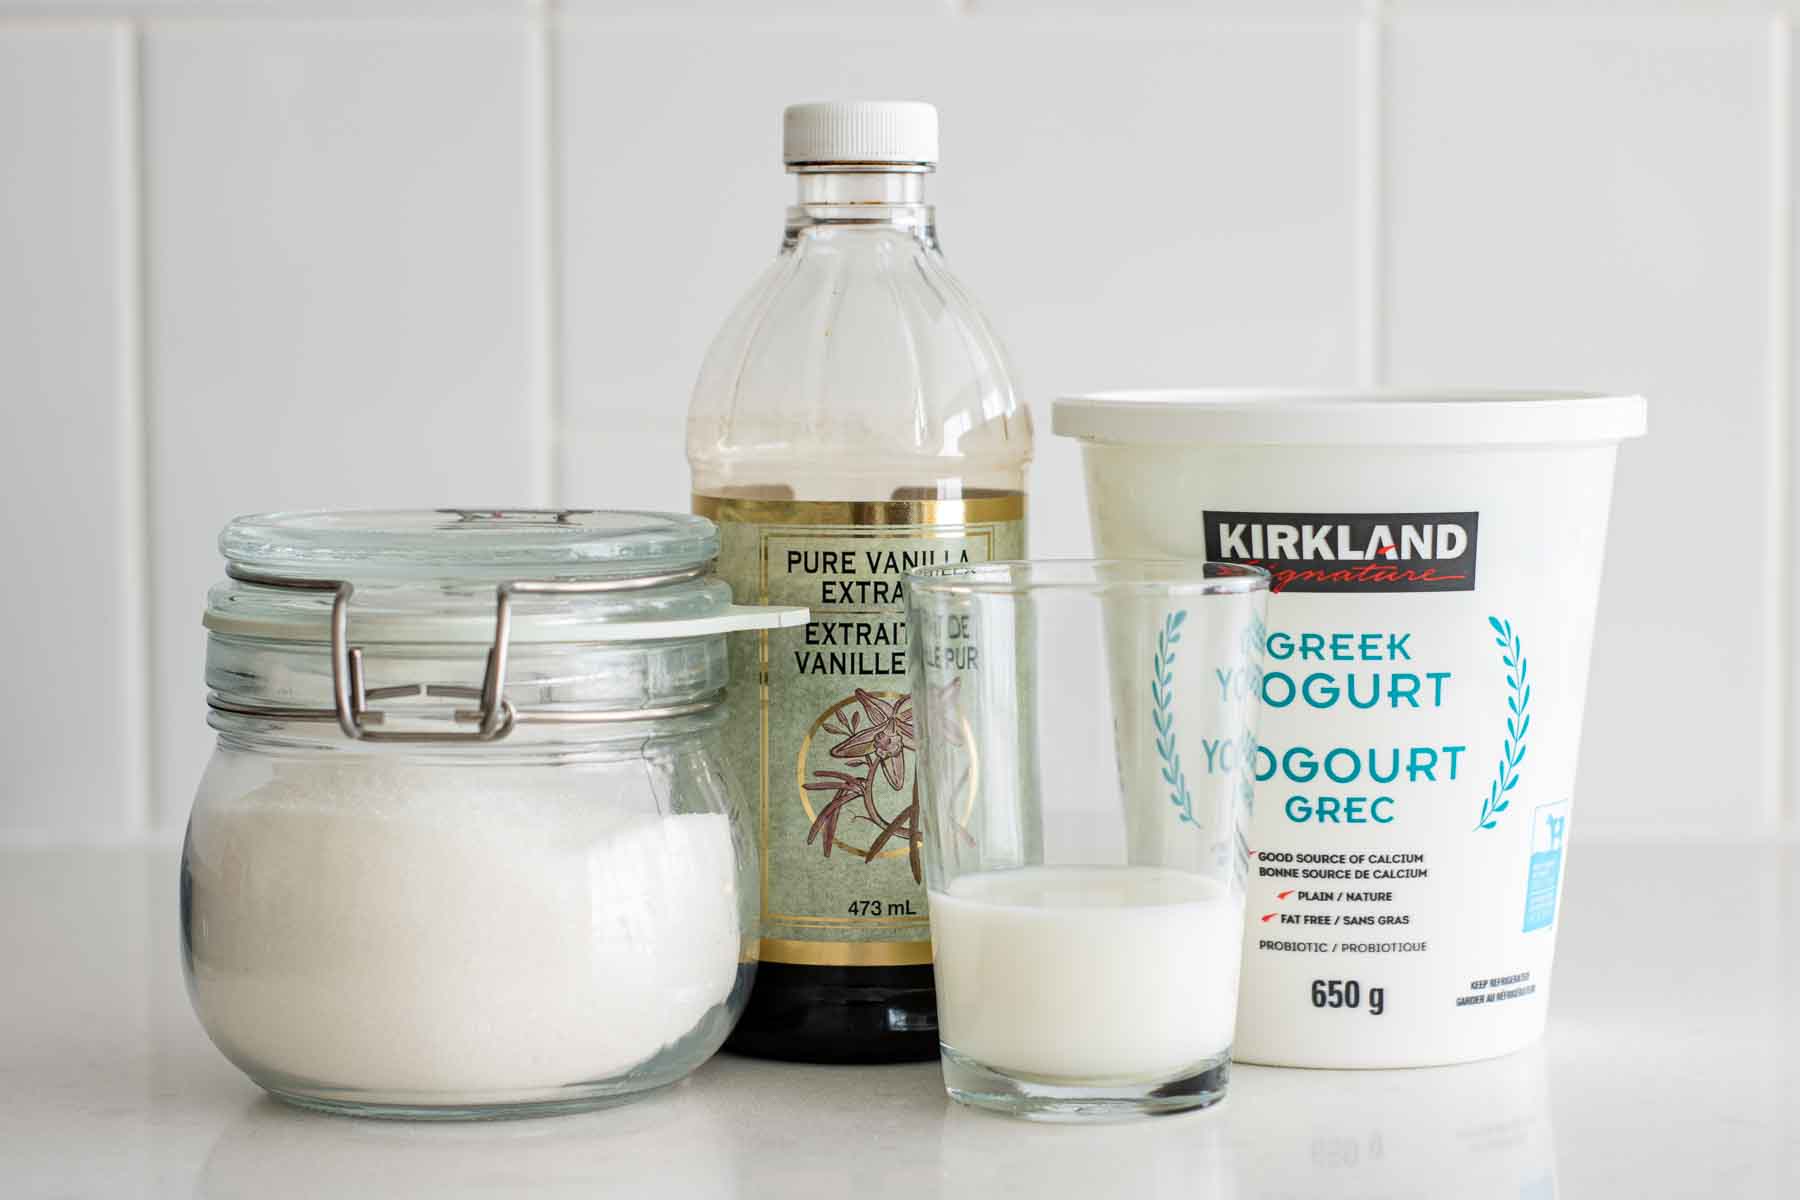 Ingredients used for making this recipe: sugar, vanilla extract, milk and greek yogurt.